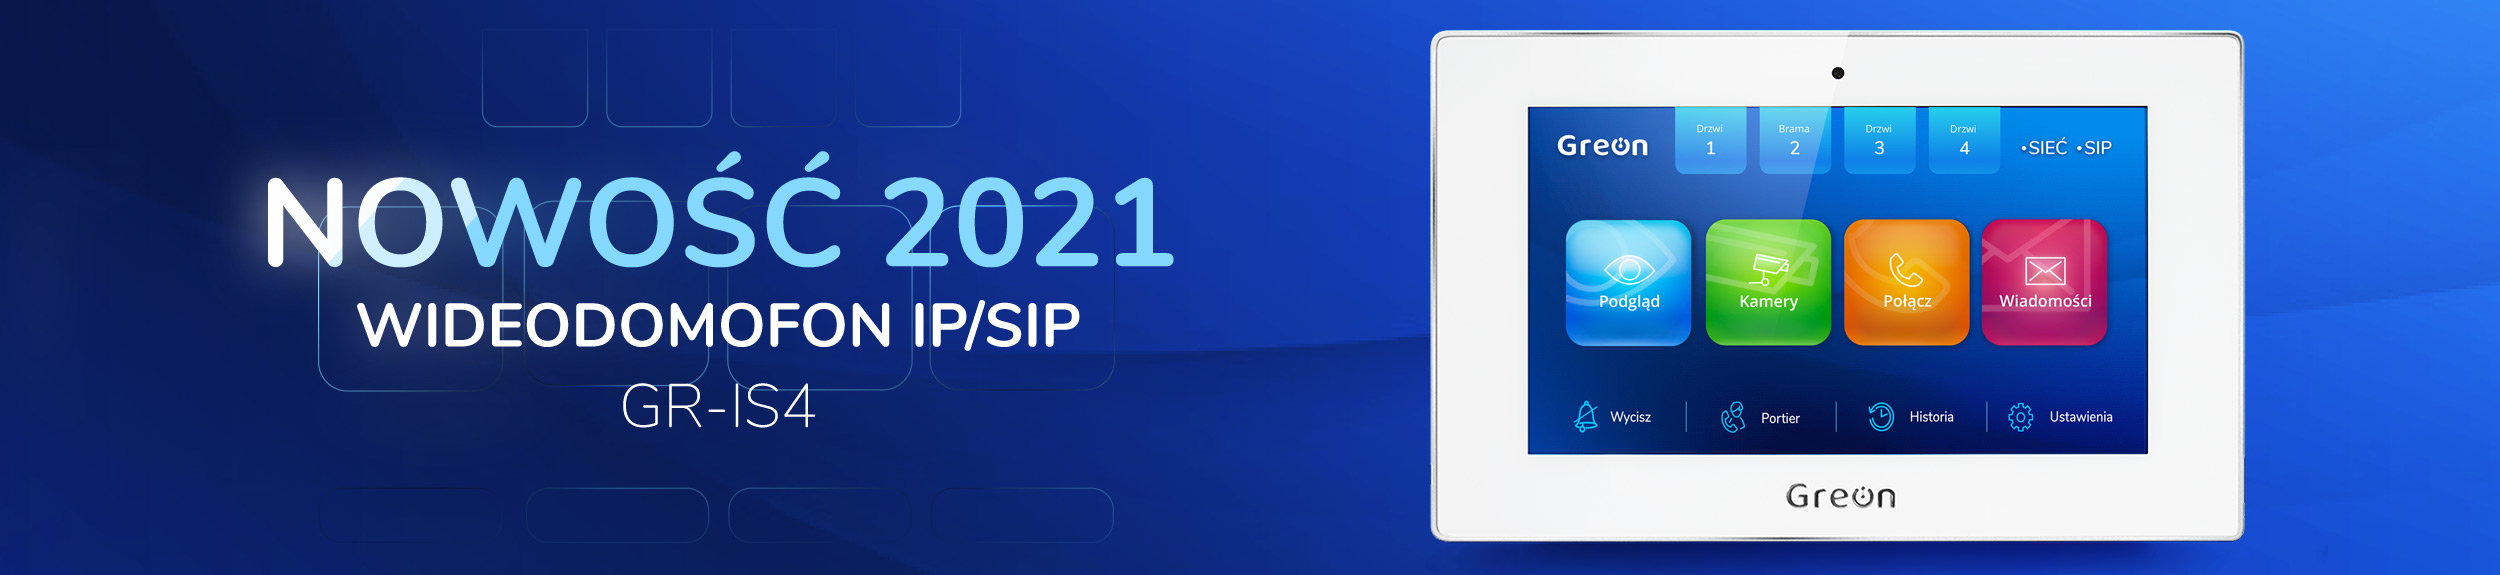 Wideodomofon IP SIP GR-IS4